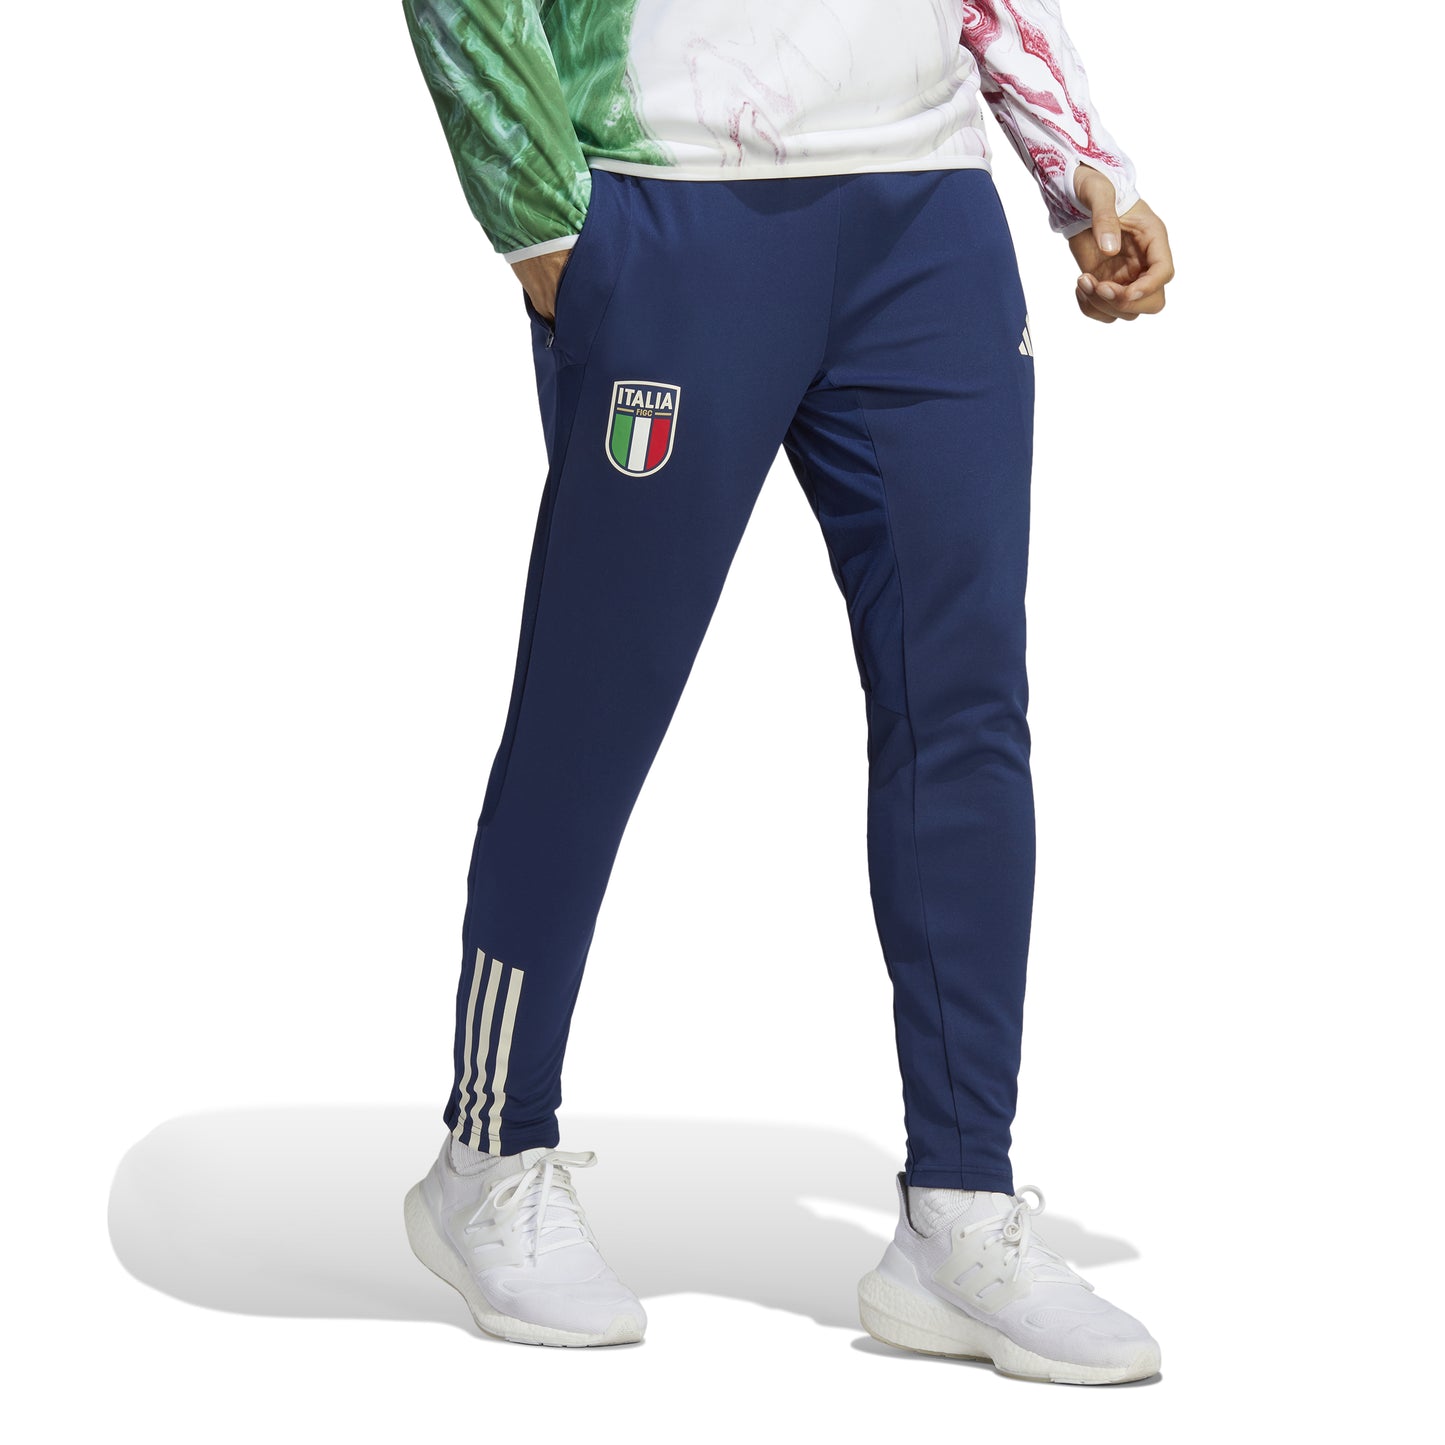 Adidas Italy Training Pant